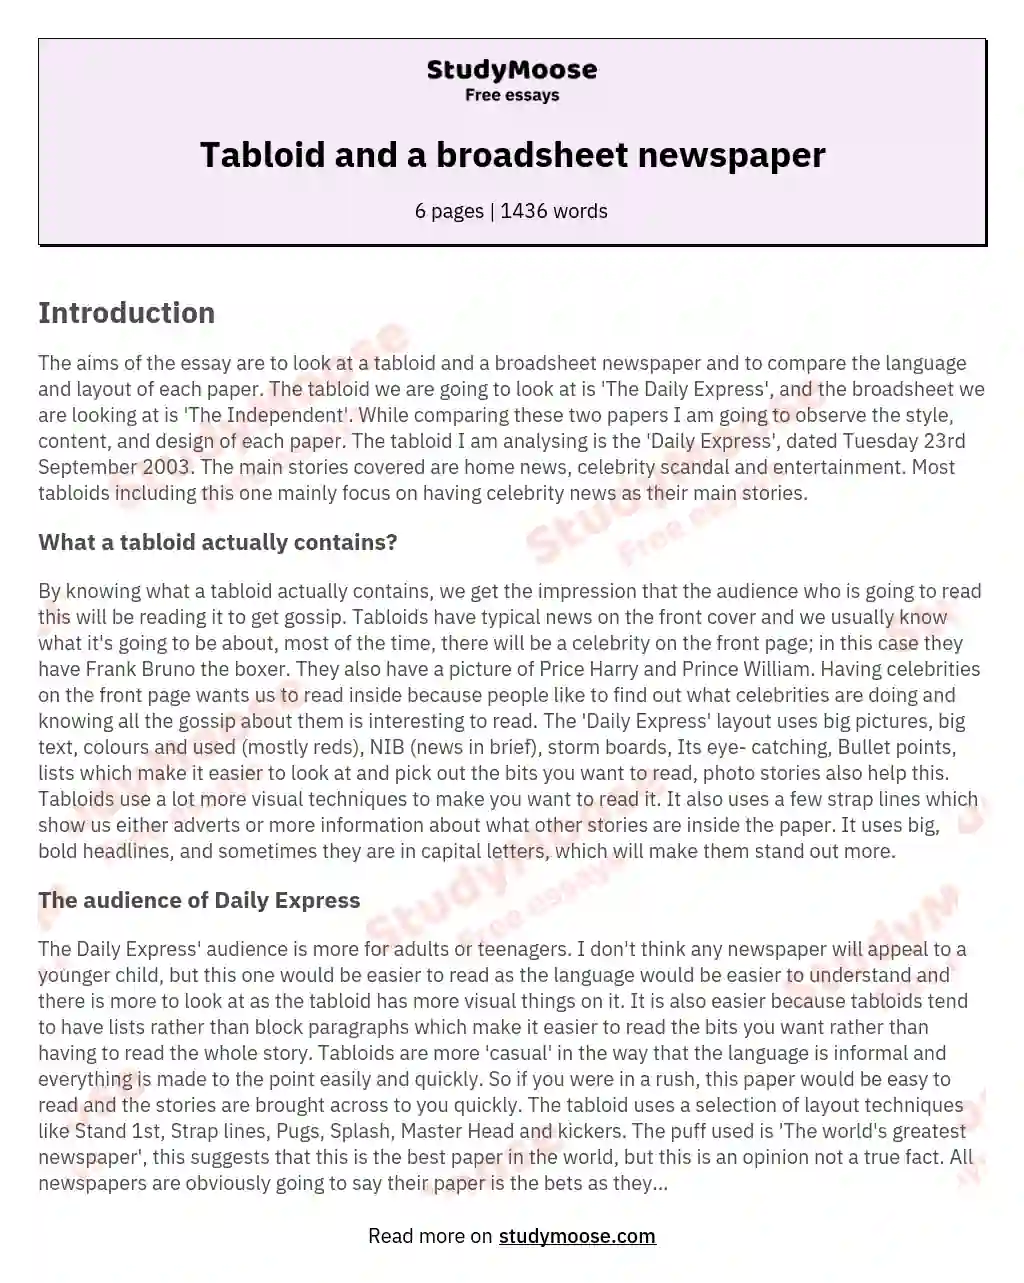 Tabloid and a broadsheet newspaper essay